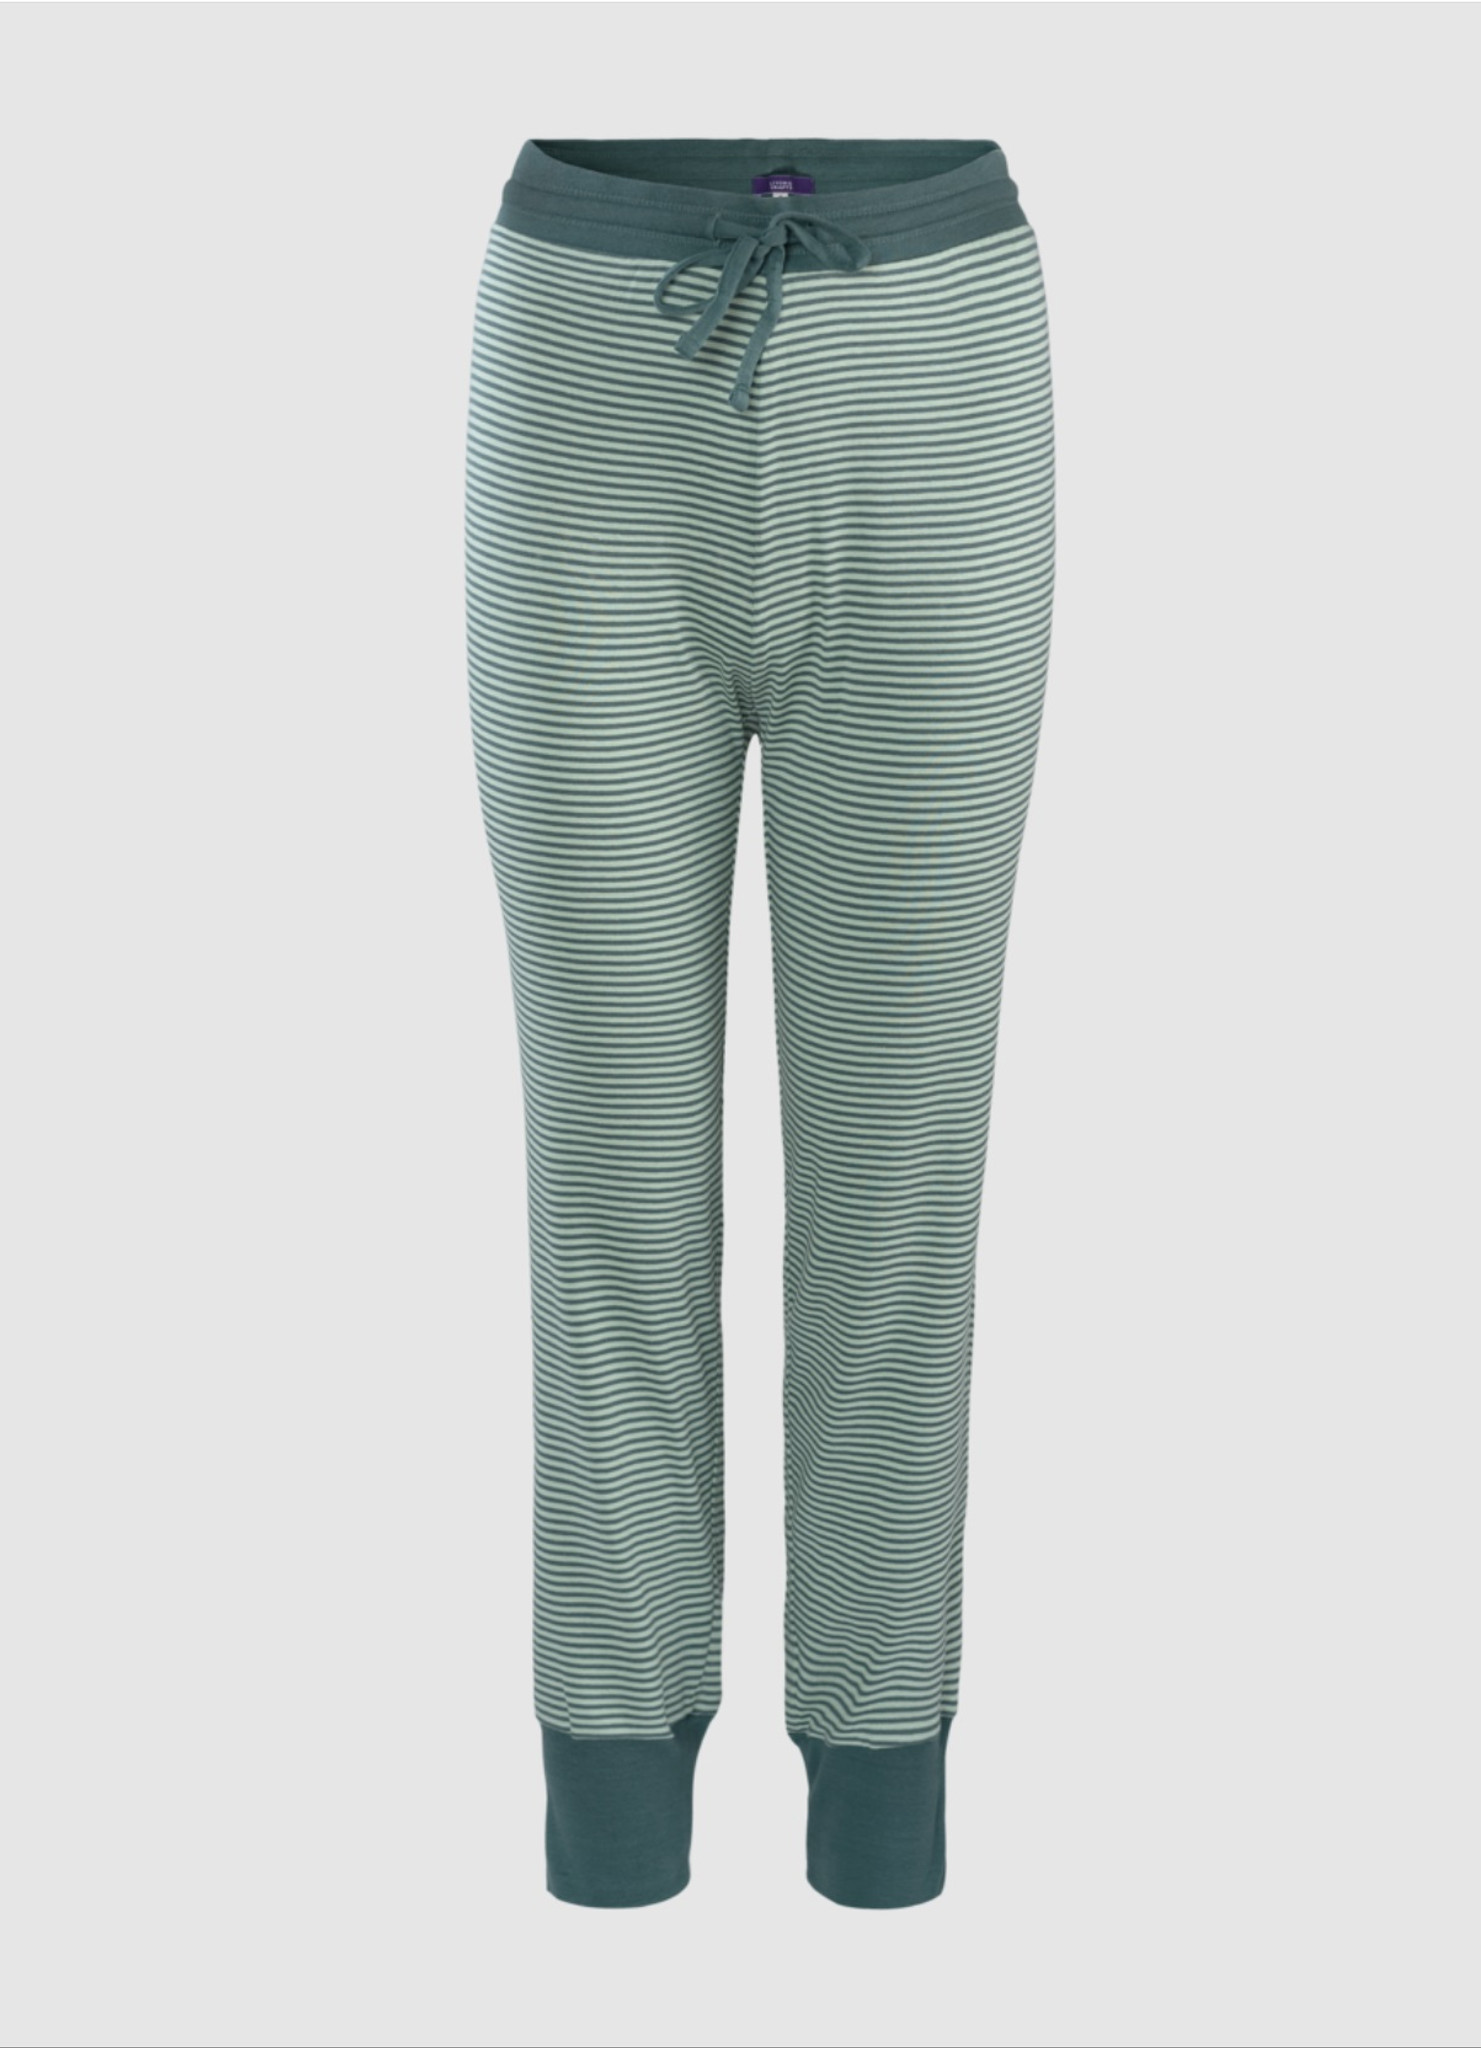 Women's Pajama & Sleep Pants | Dillard's